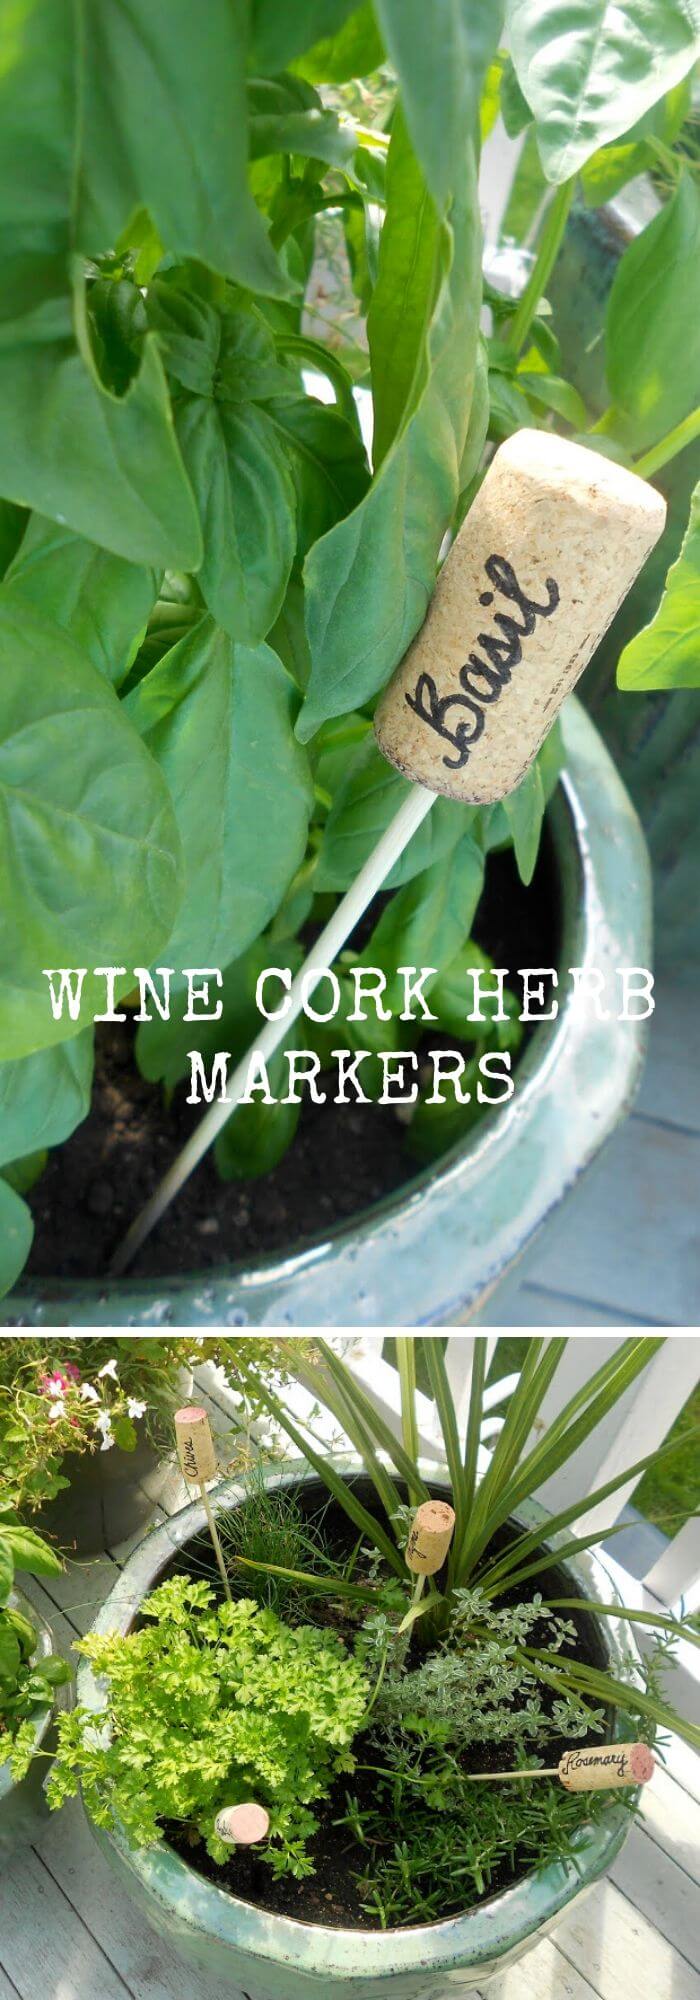 16 wine cork craft ideas